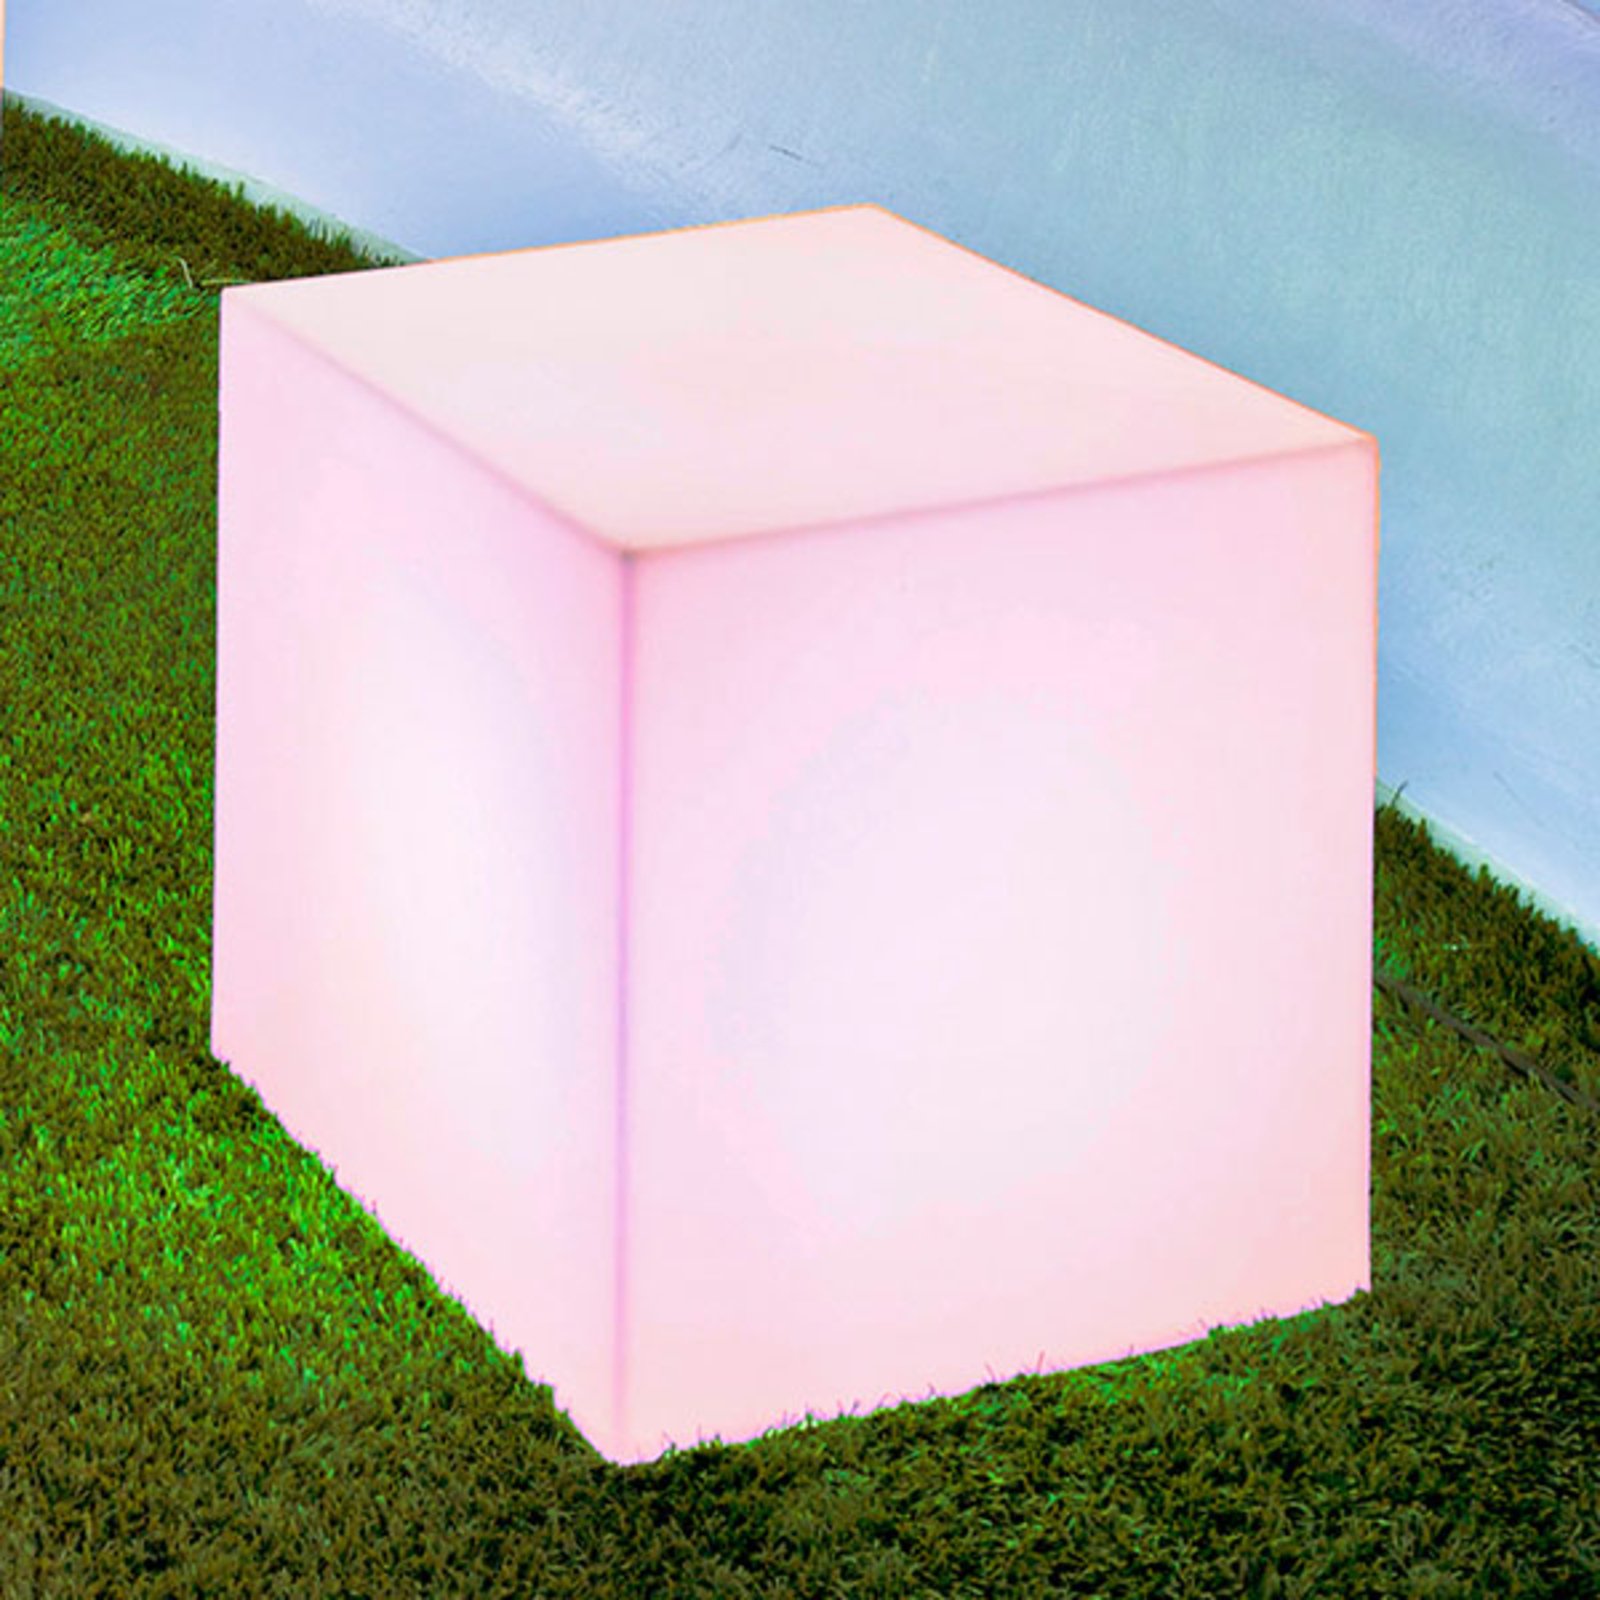 Lampa solarna Newgarden Cuby cube, wysokość 43 cm